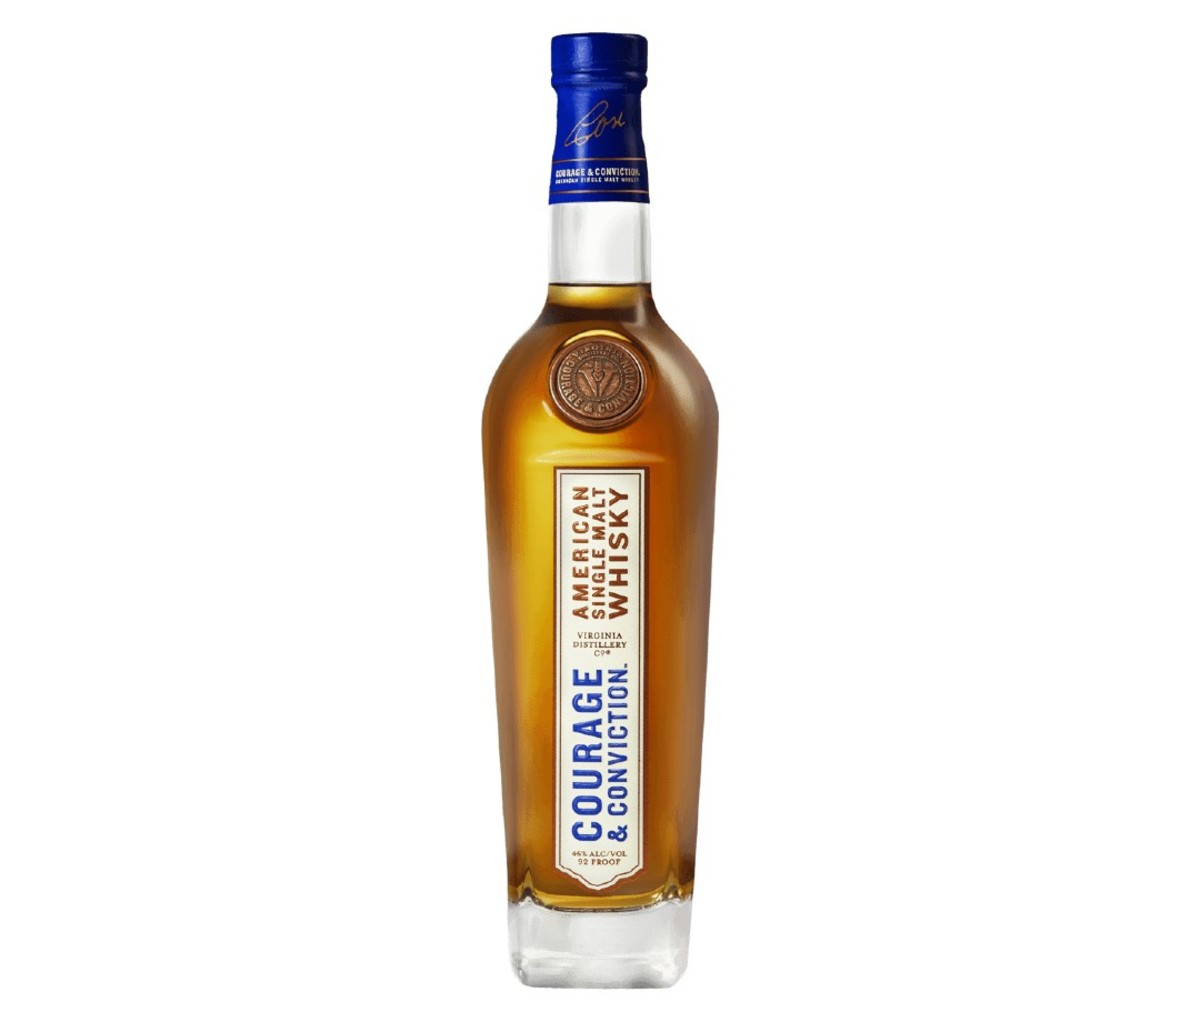 A bottle of Virginia Distillery Courage & Conviction American Single Malt Whisky